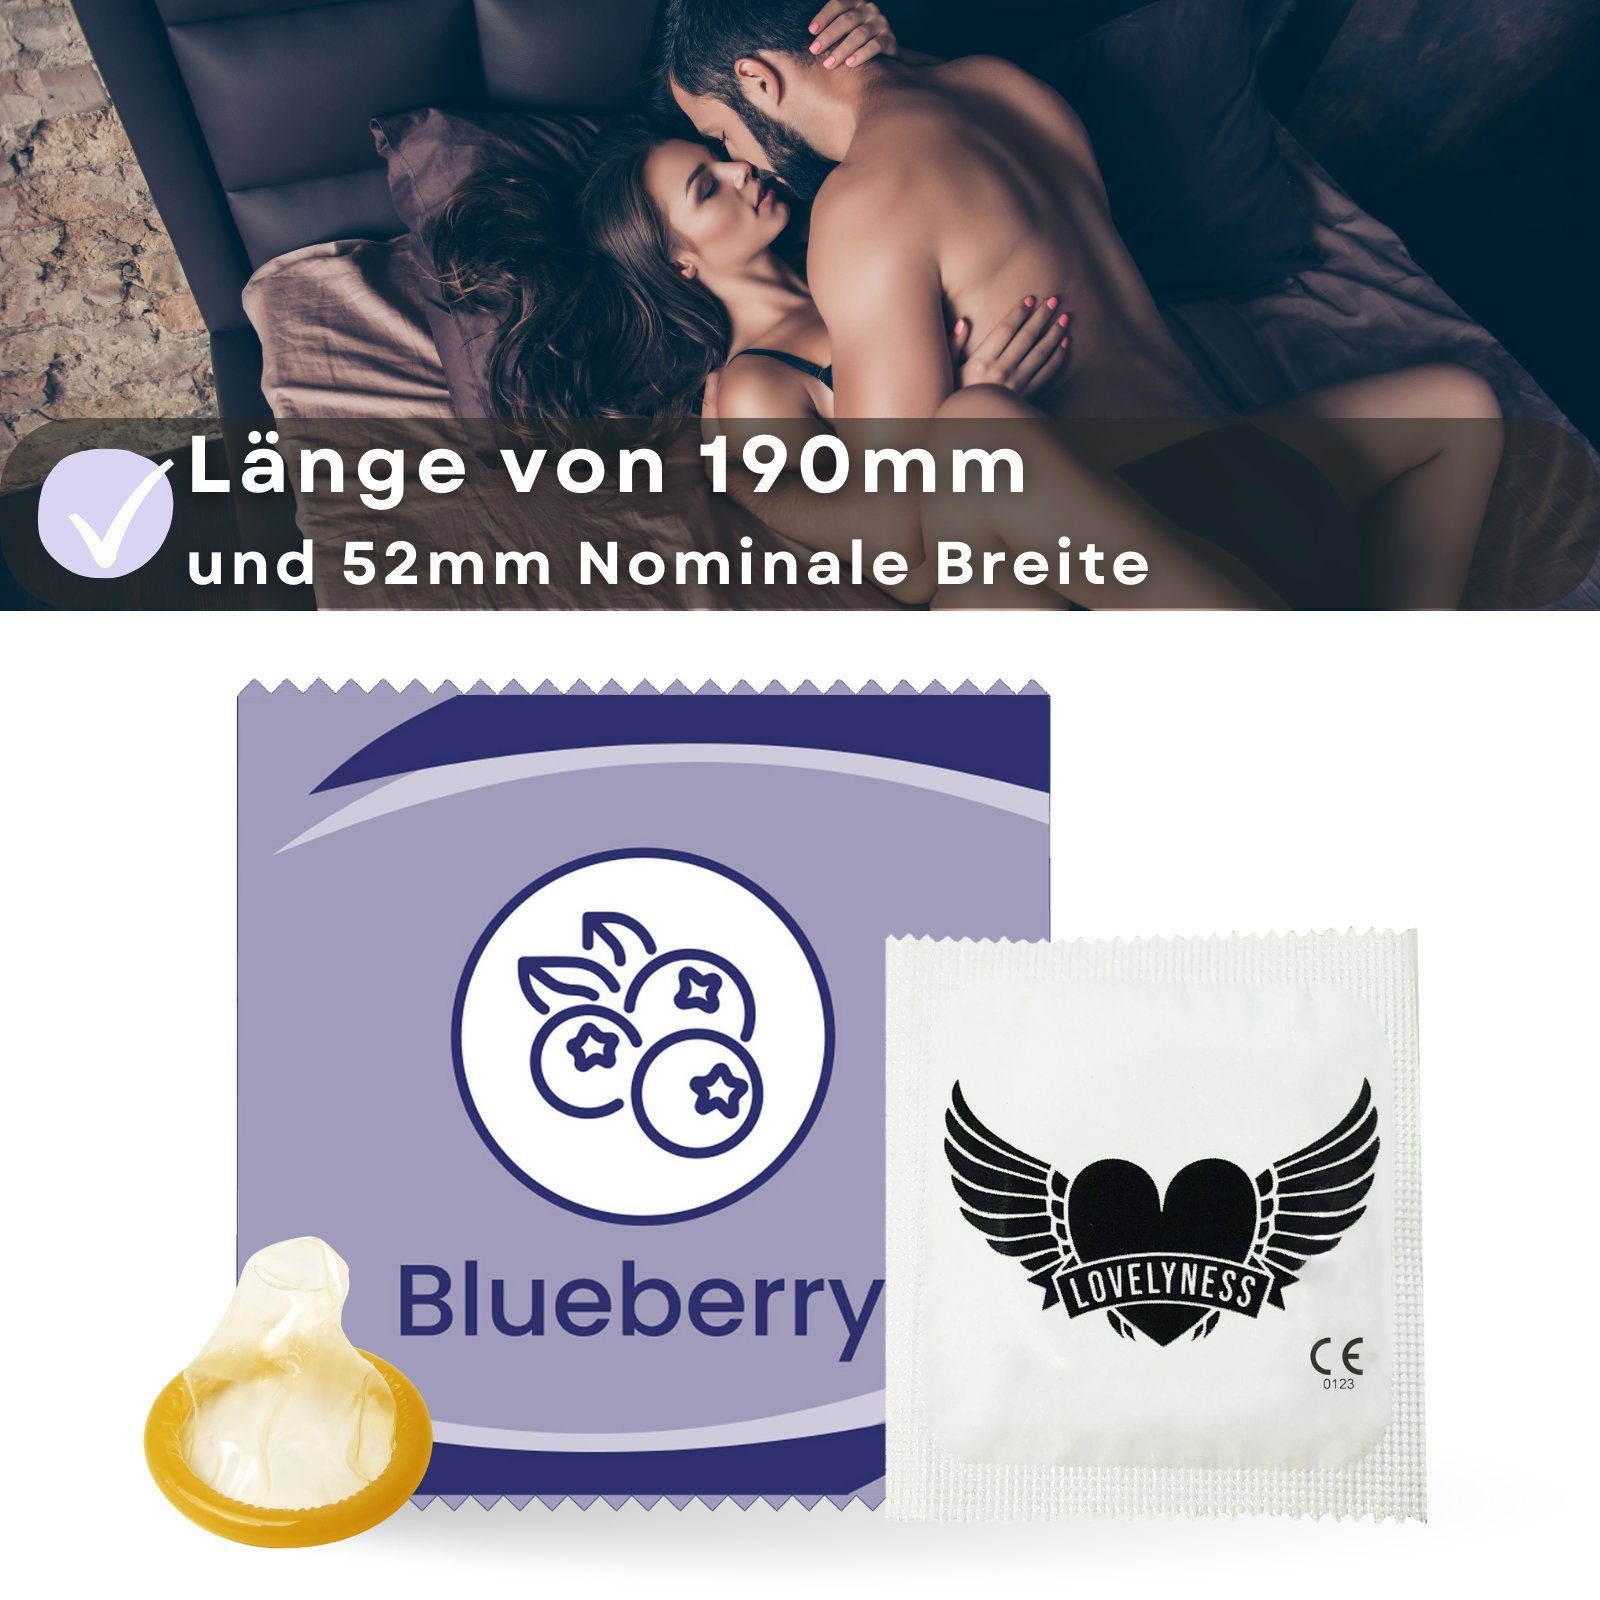 Lovelyness Kondome - mit Blaubeere Aroma: Geschmack